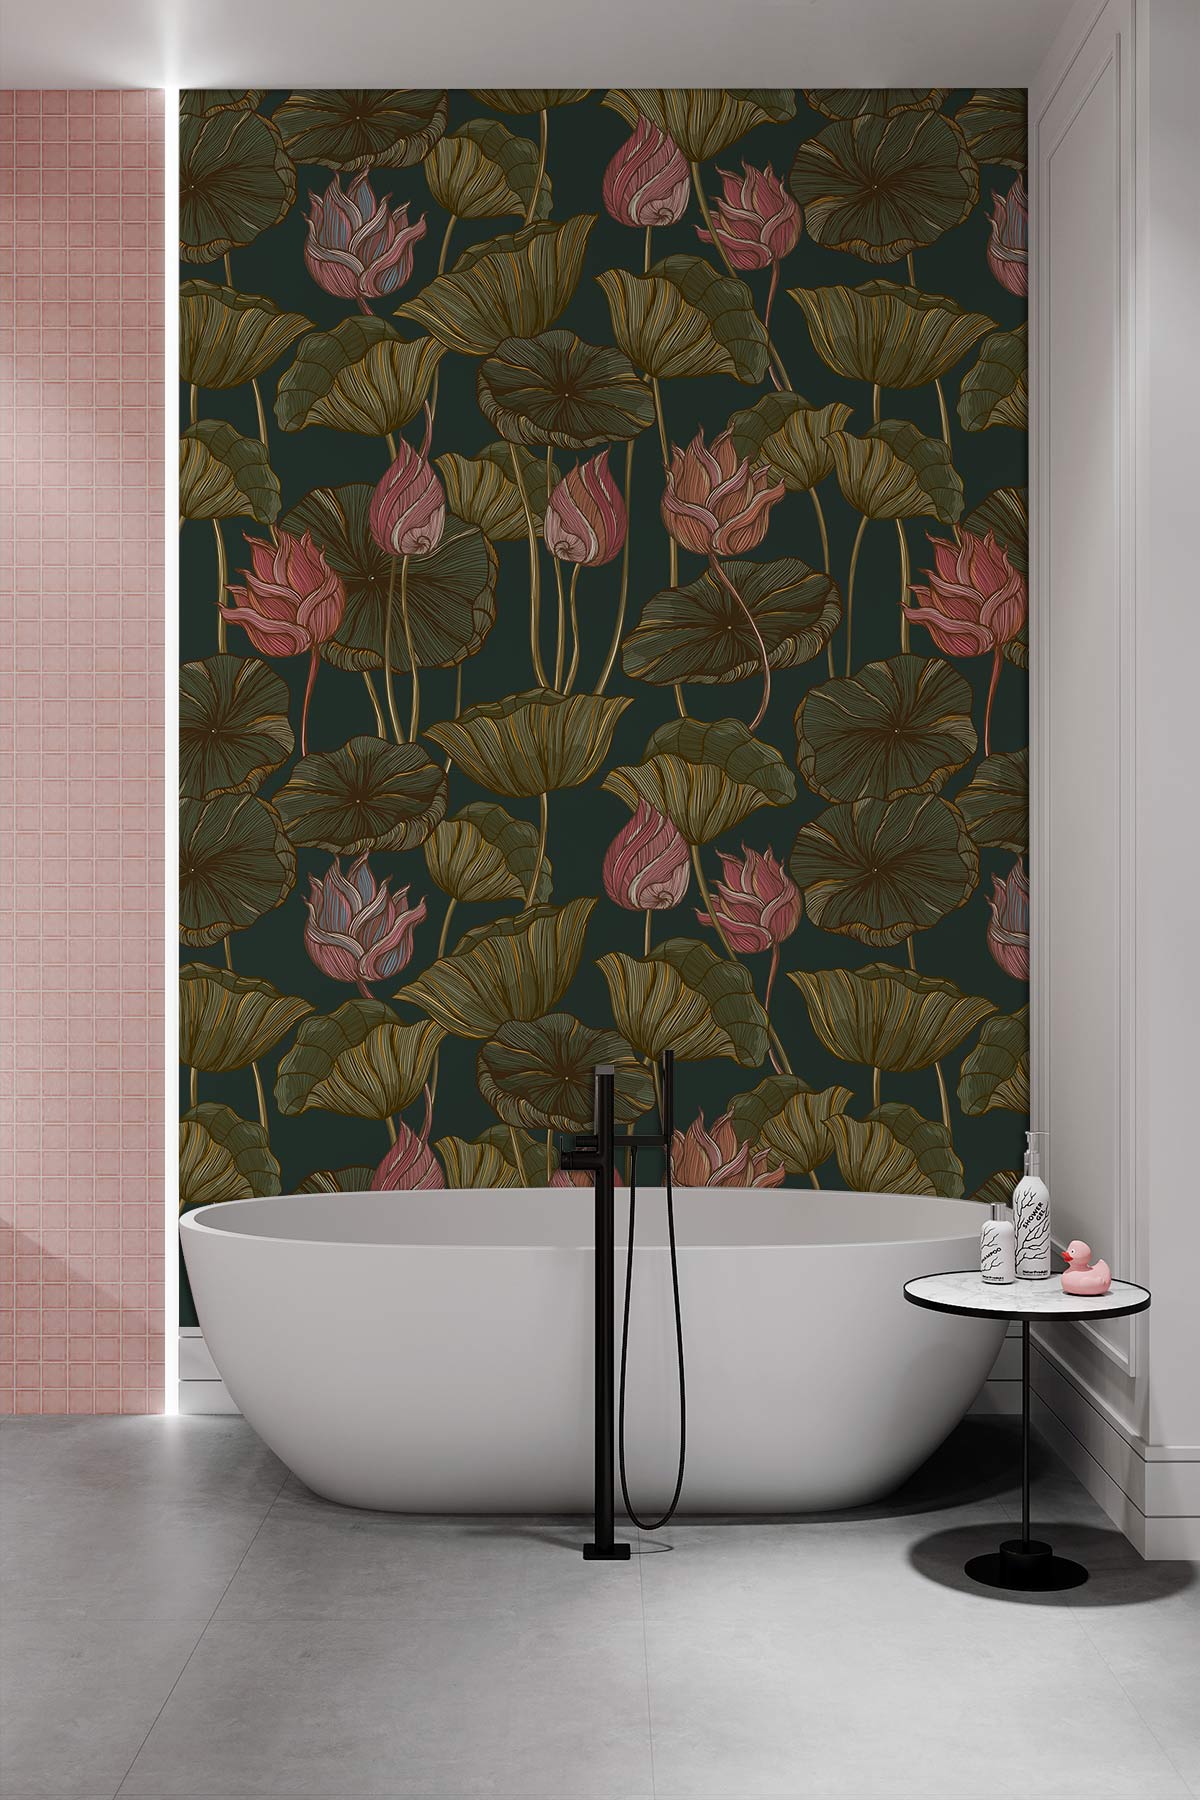 booming lotus flower wallpaper decoration